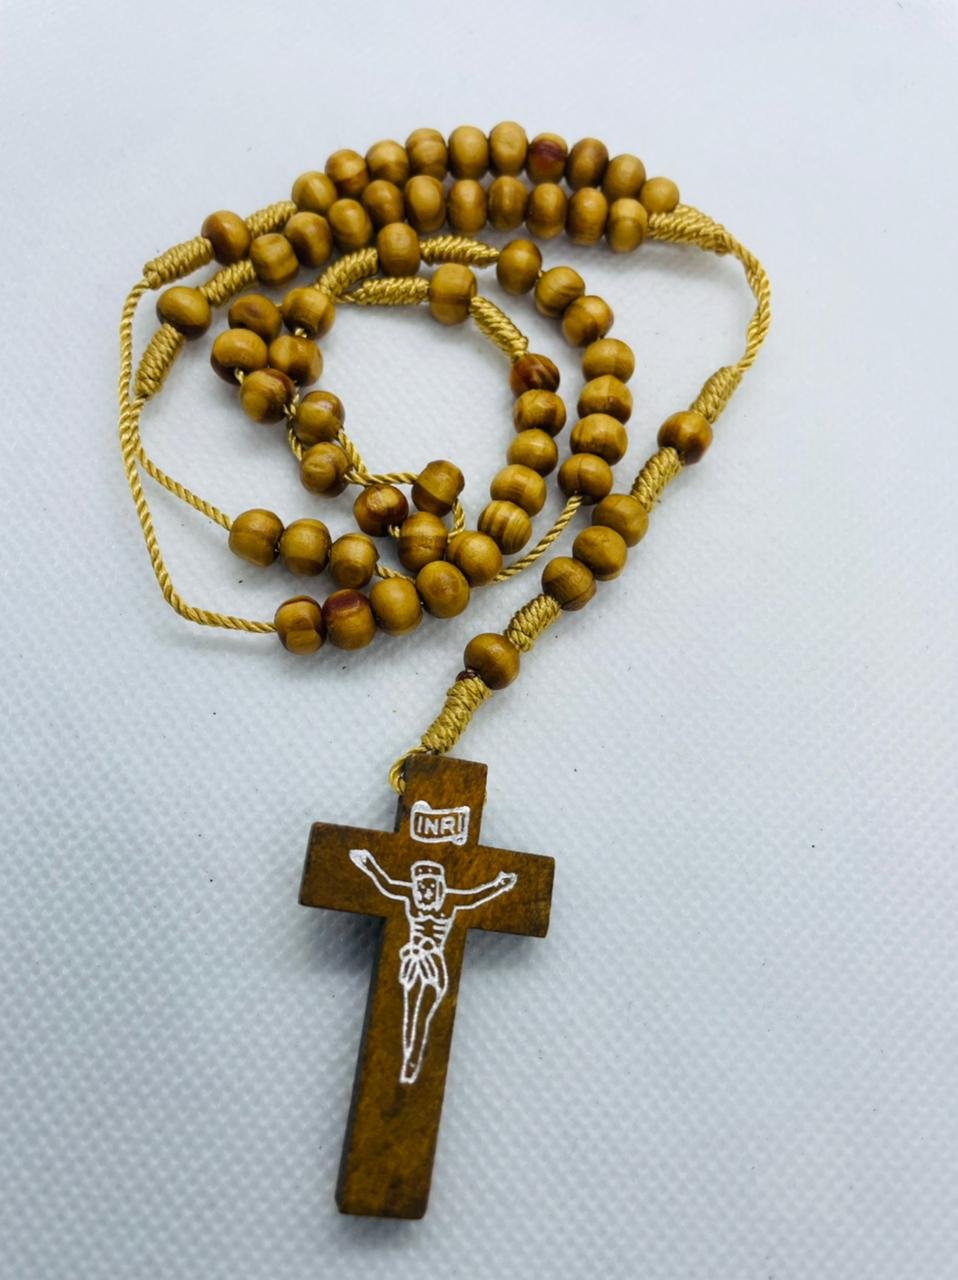 12 x Wholesale Bulk Wooden Rosary Necklace for Baptism, Wedding, Memorial  Gift | eBay